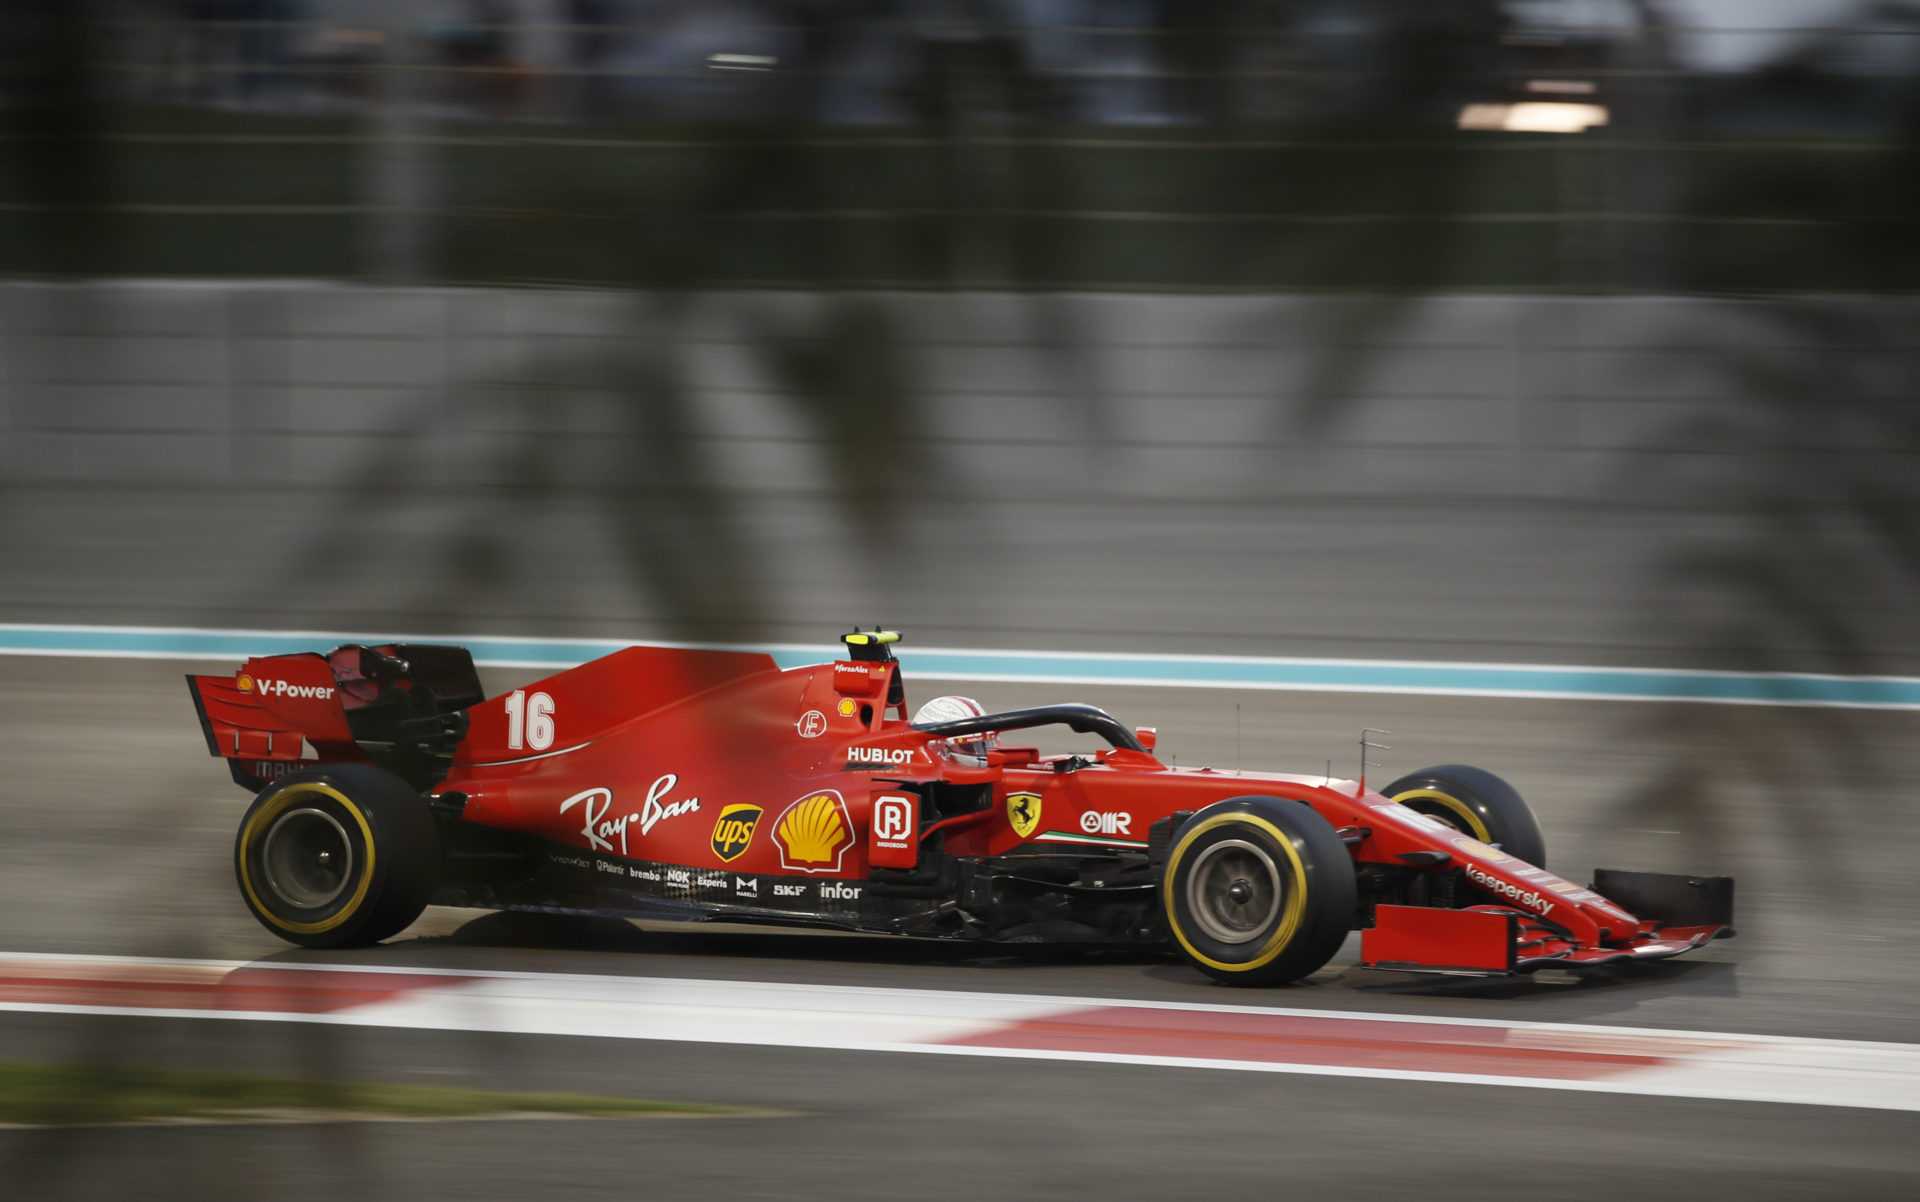 REGARDER: Ferrari Junior Armstrong Trolls hilarement les autres pilotes du GP virtuel F1